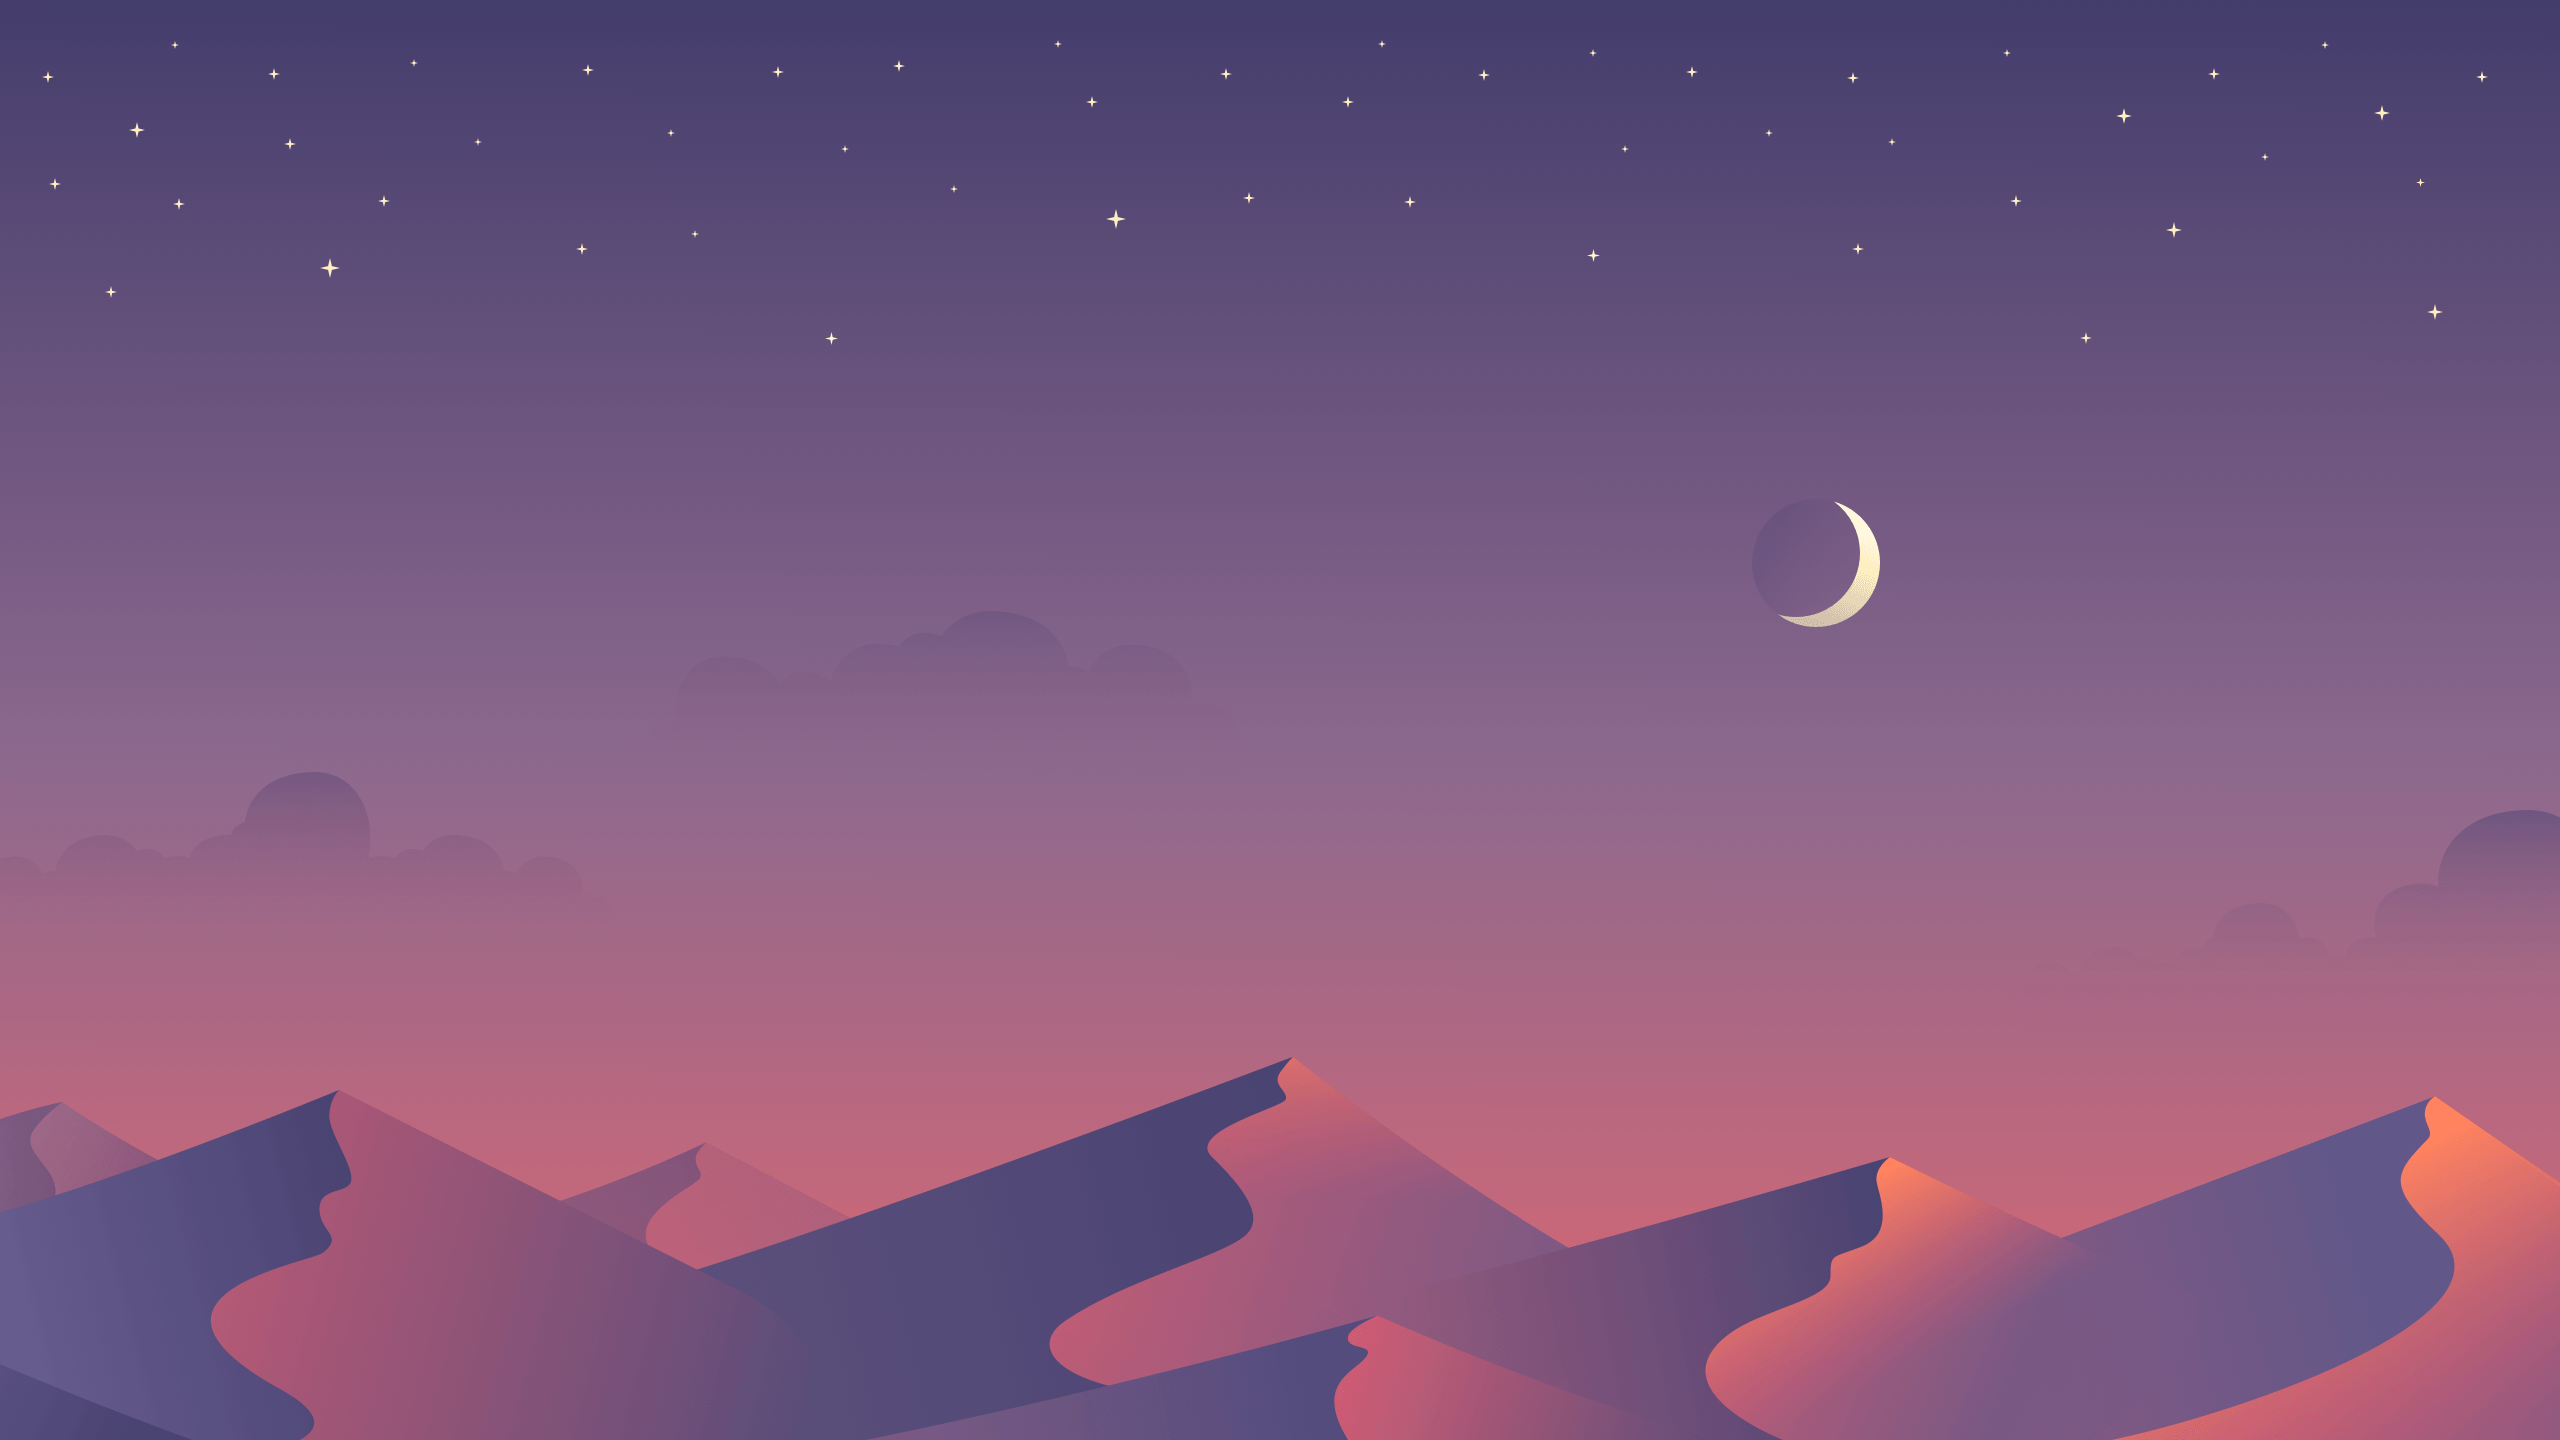 Deserts Moon Android Skies Tablet Desktop Background Image